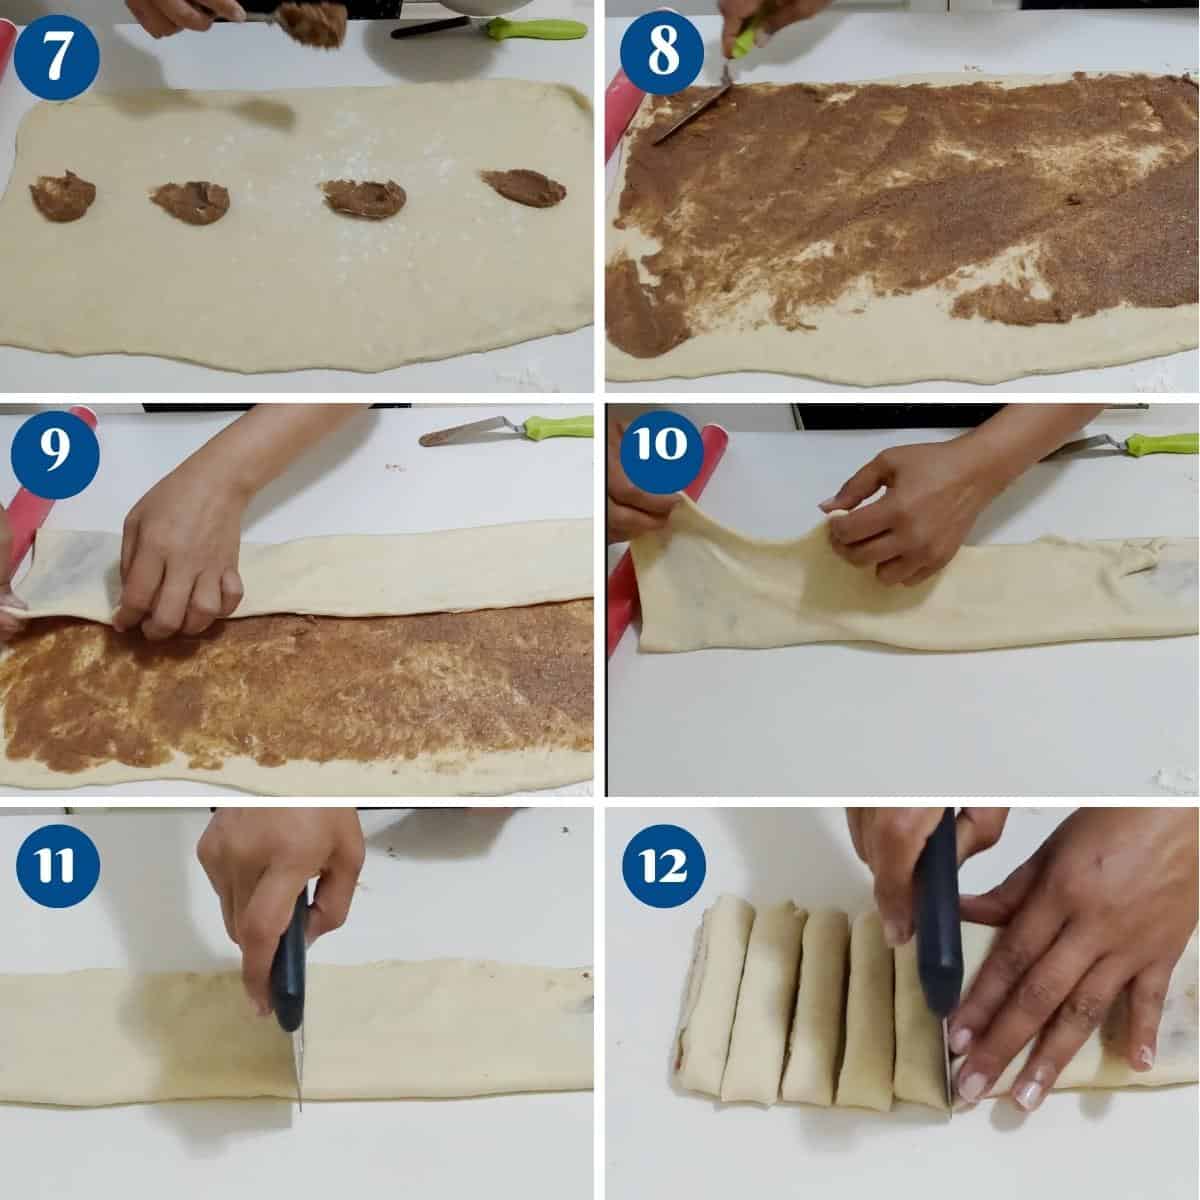 Progress pictures spreading the cinnamon sugar on the dough.